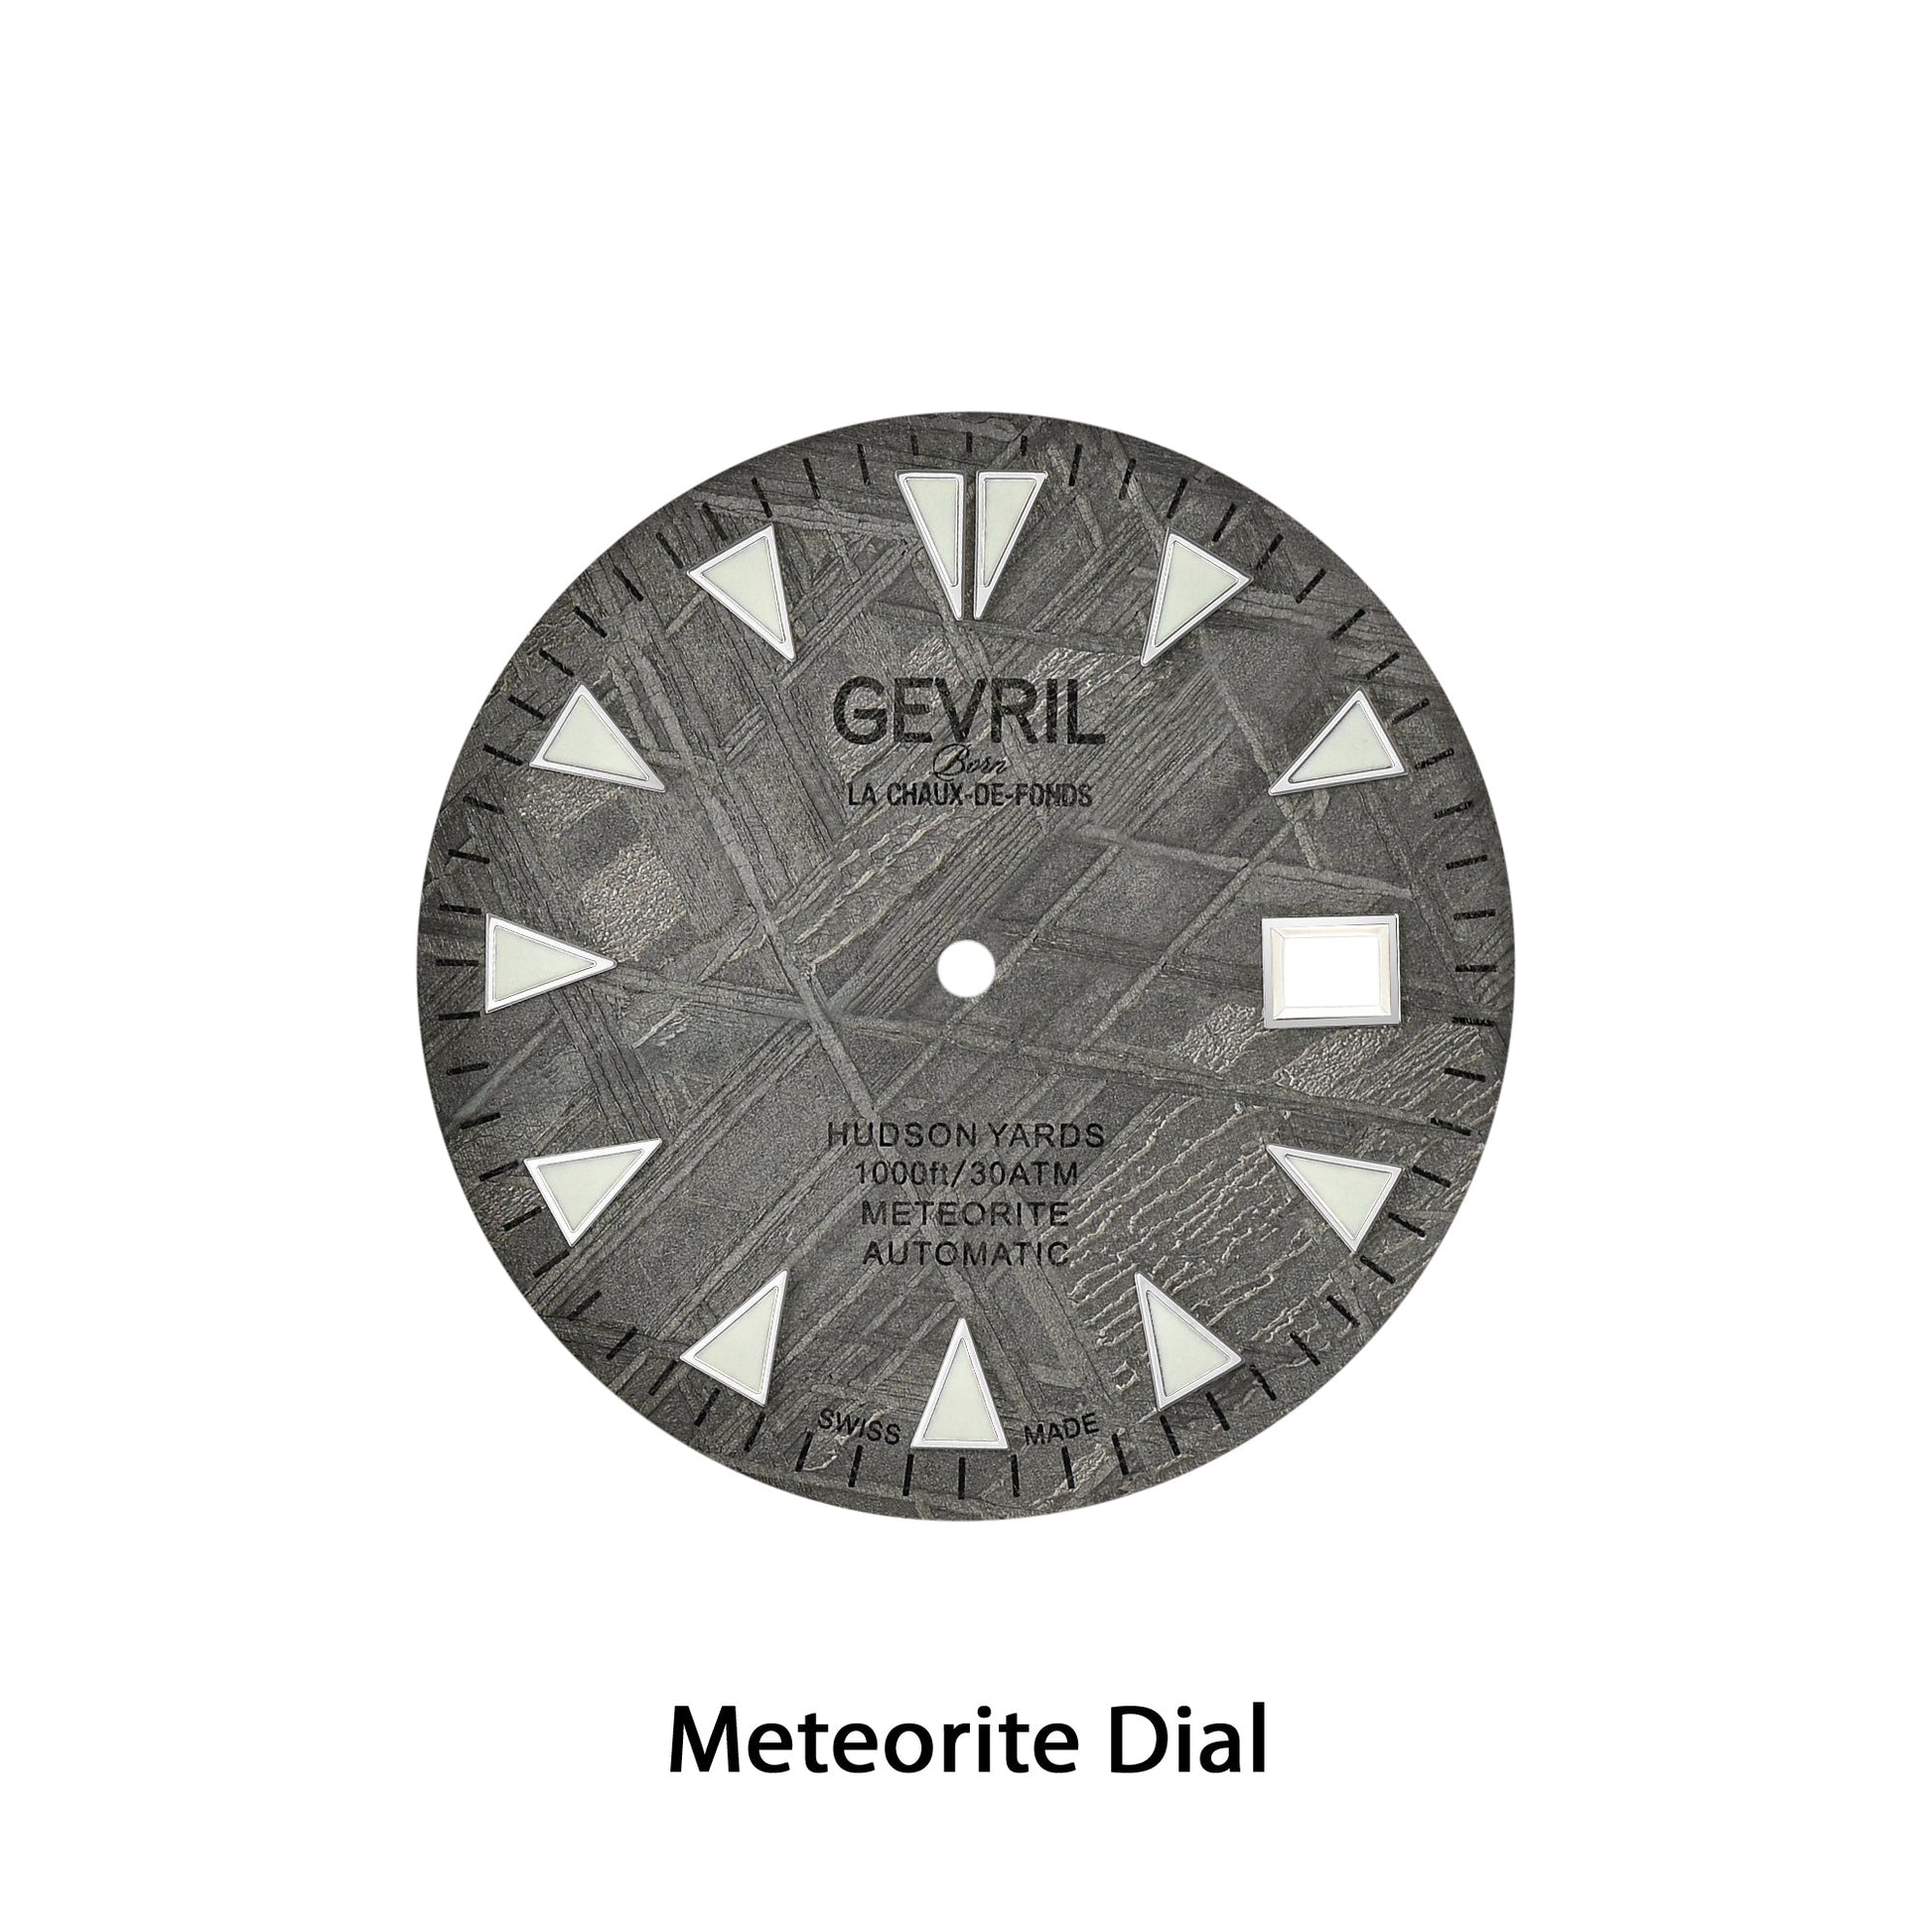 Gevril-Luxury-Swiss-Watches-Gevril Hudson Yards - Diver - Meteorite Dial-48851B